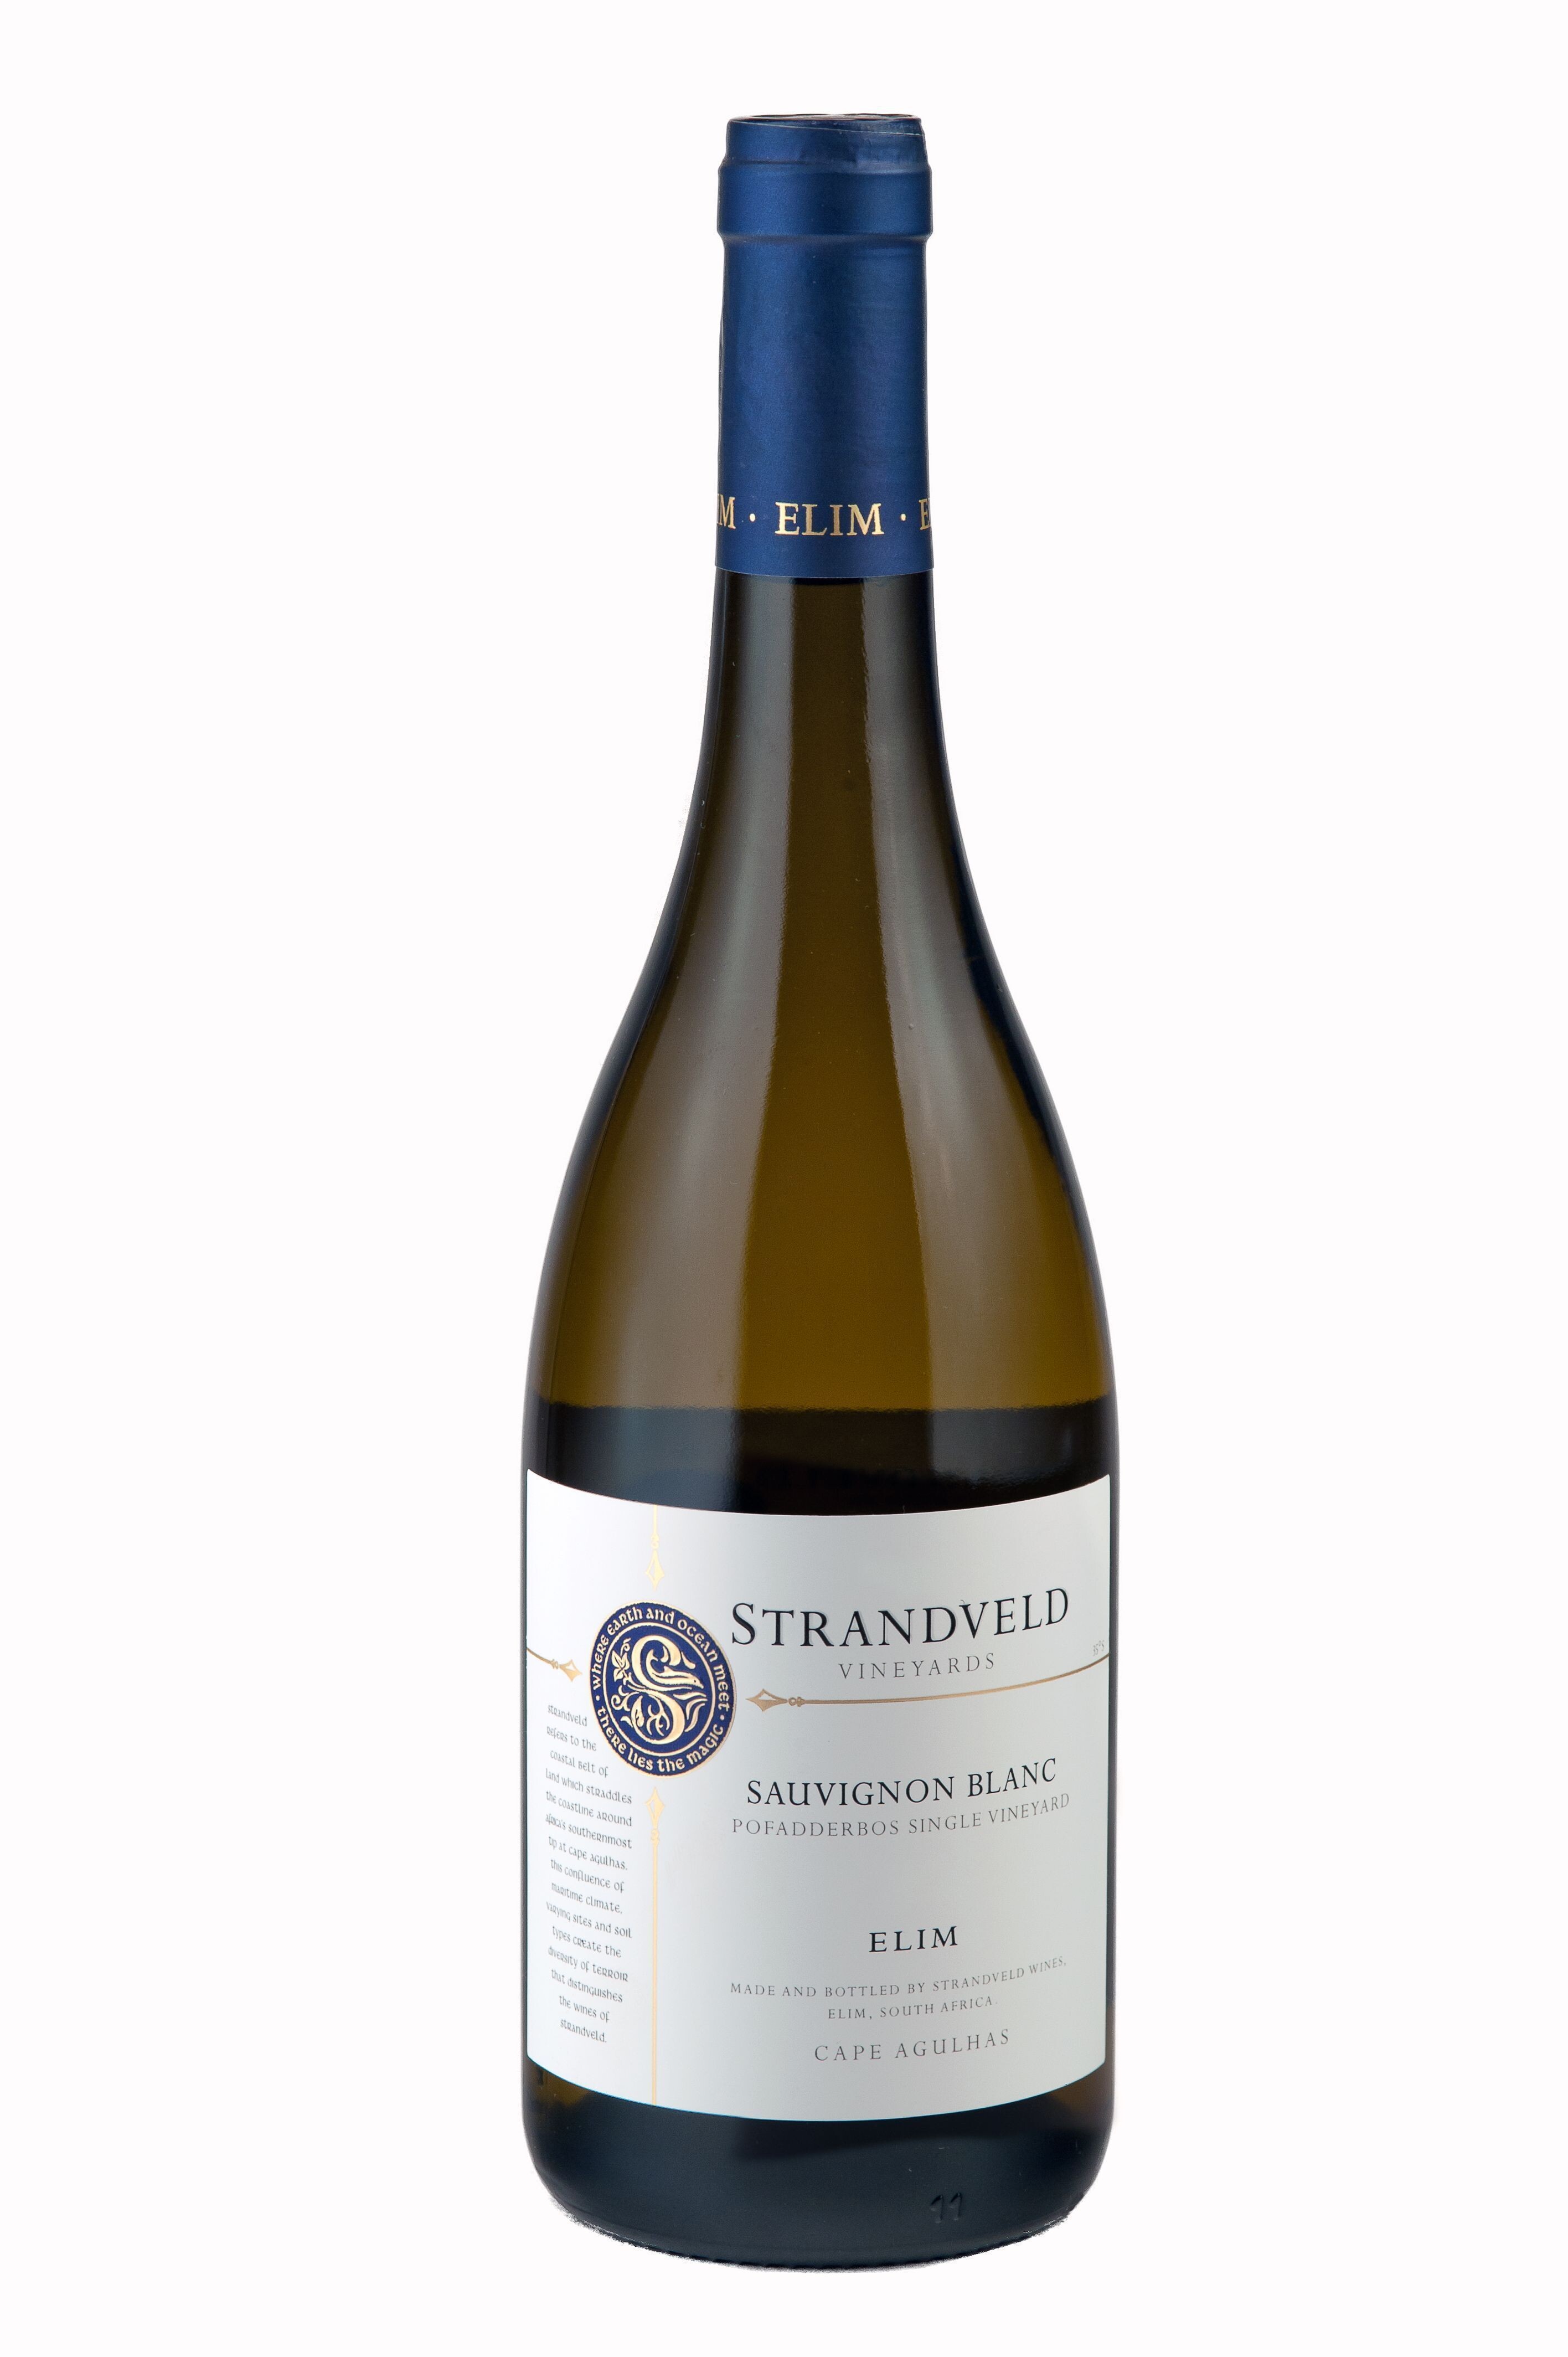 Pofadderbos Sauvignon Blanc 75cl 2018 Strandveld Vineyards